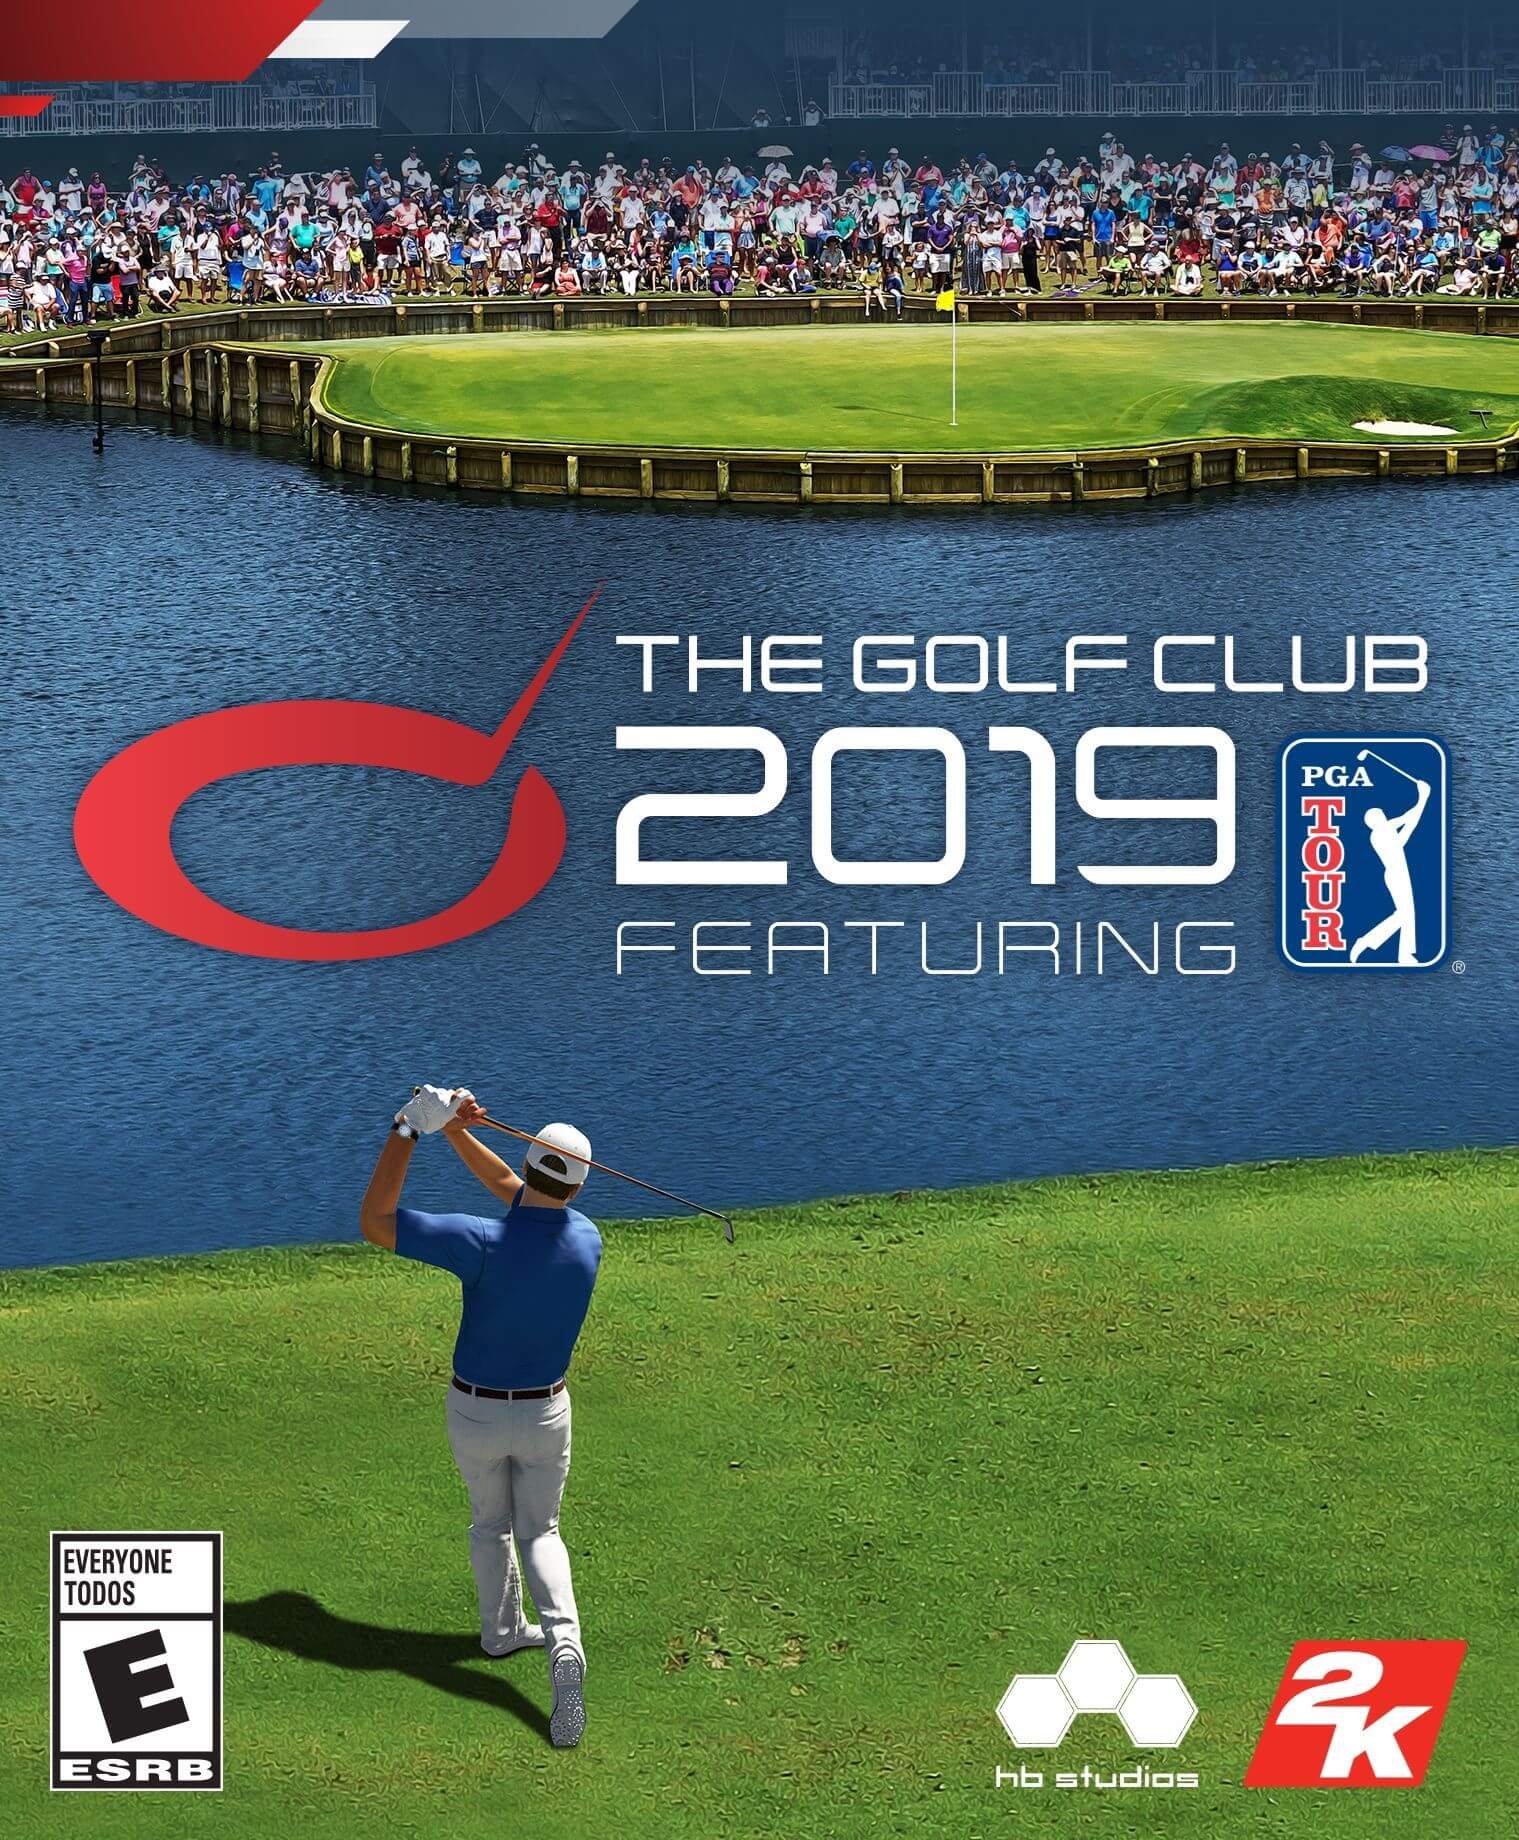 The Golf Club 2019 featuring the PGA TOUR (ROW)